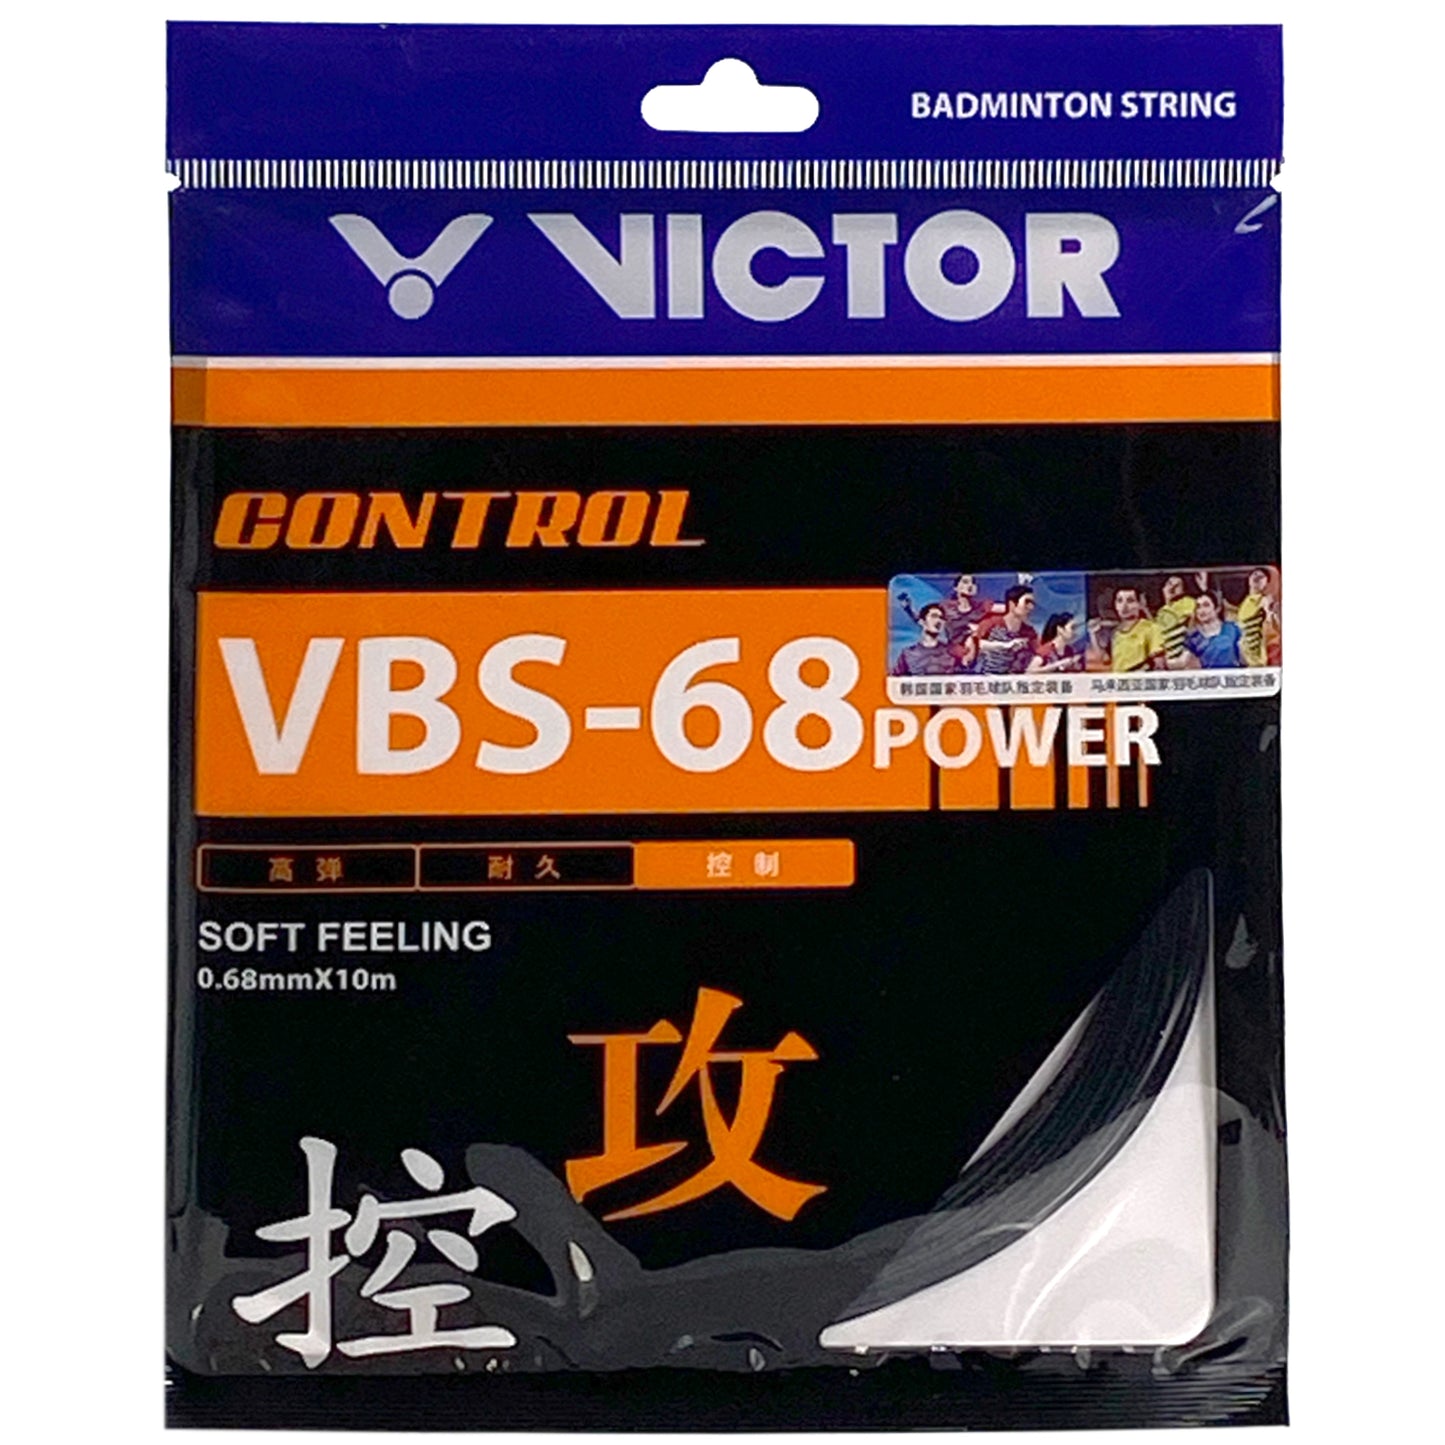 Victor VBS-68 Power 10m Noir